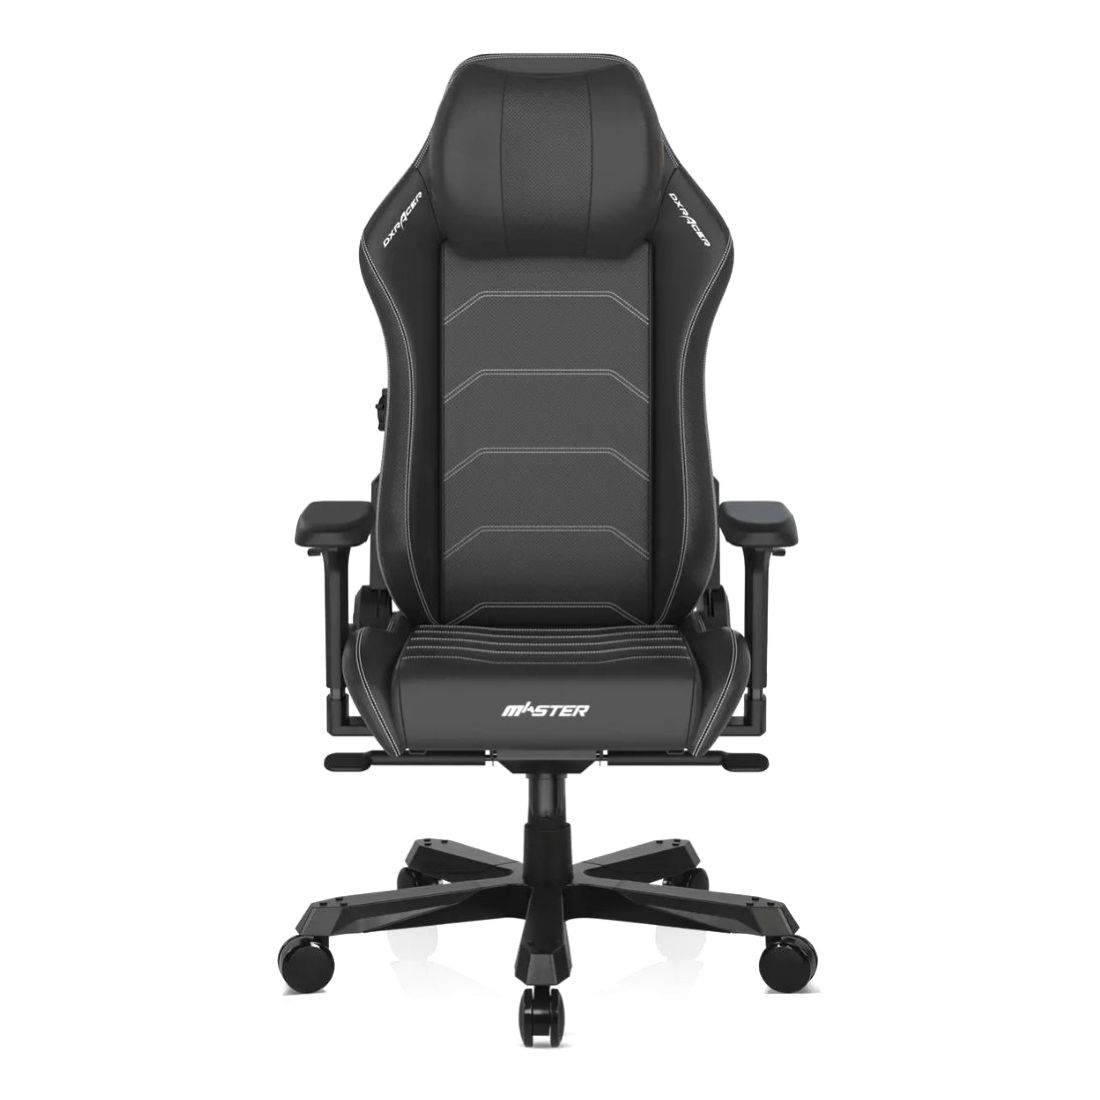 DXRacer Master Series Gaming Chair Black